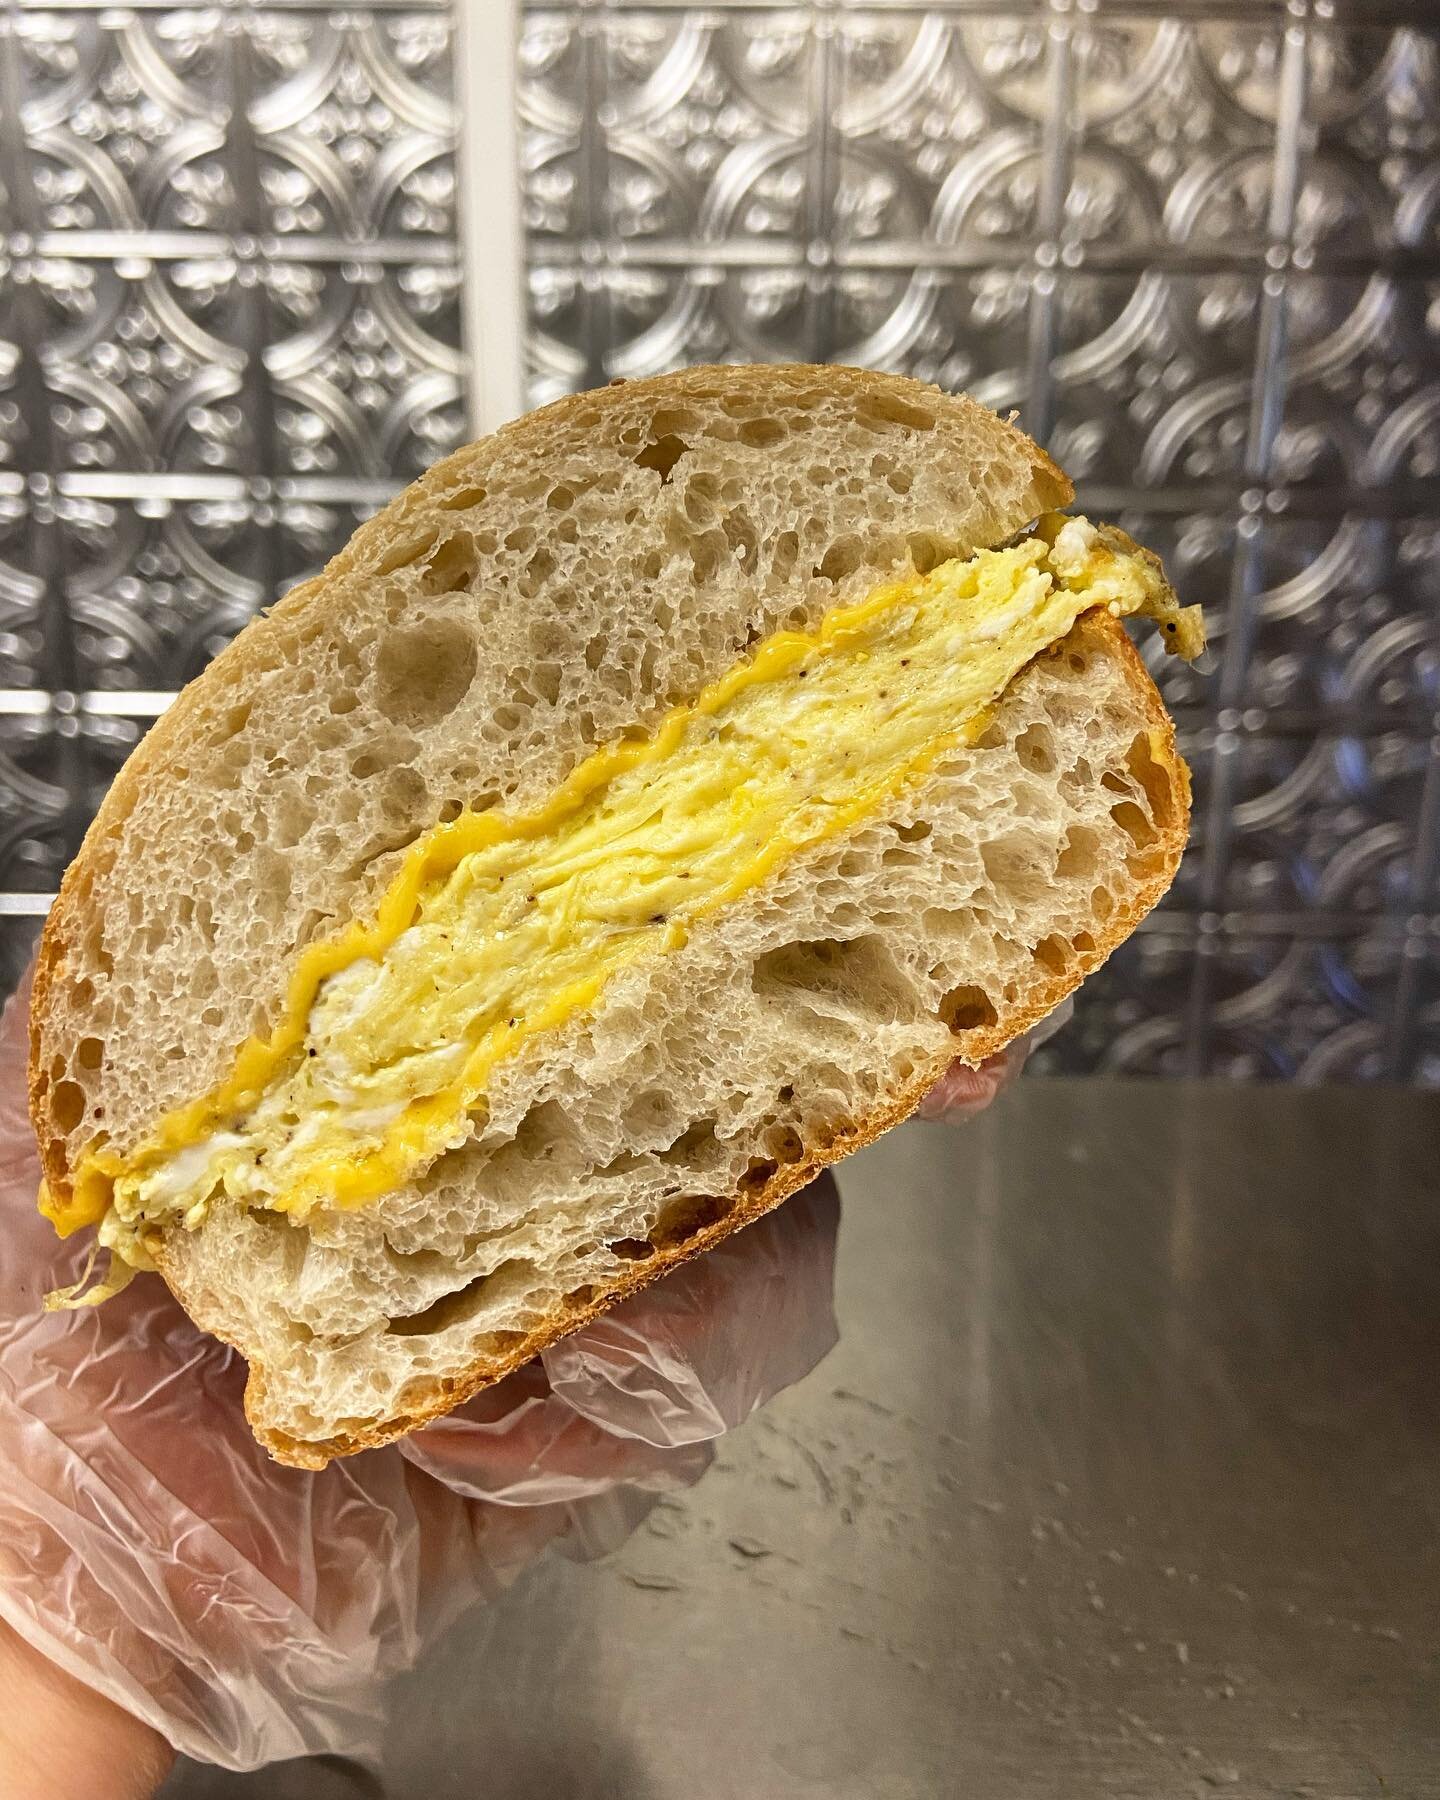 Sunday morning perfection #truesalvagecafe #cafe #bakery #chefsigne #eggsandwich #eggandcheese #mapso #soma #maplewoodnj #southorangenj #njeats #njcafe #breakfast #weekendvibes #eatlocalnj #smallbusiness #yum #foodgram #foodpic #sandwich